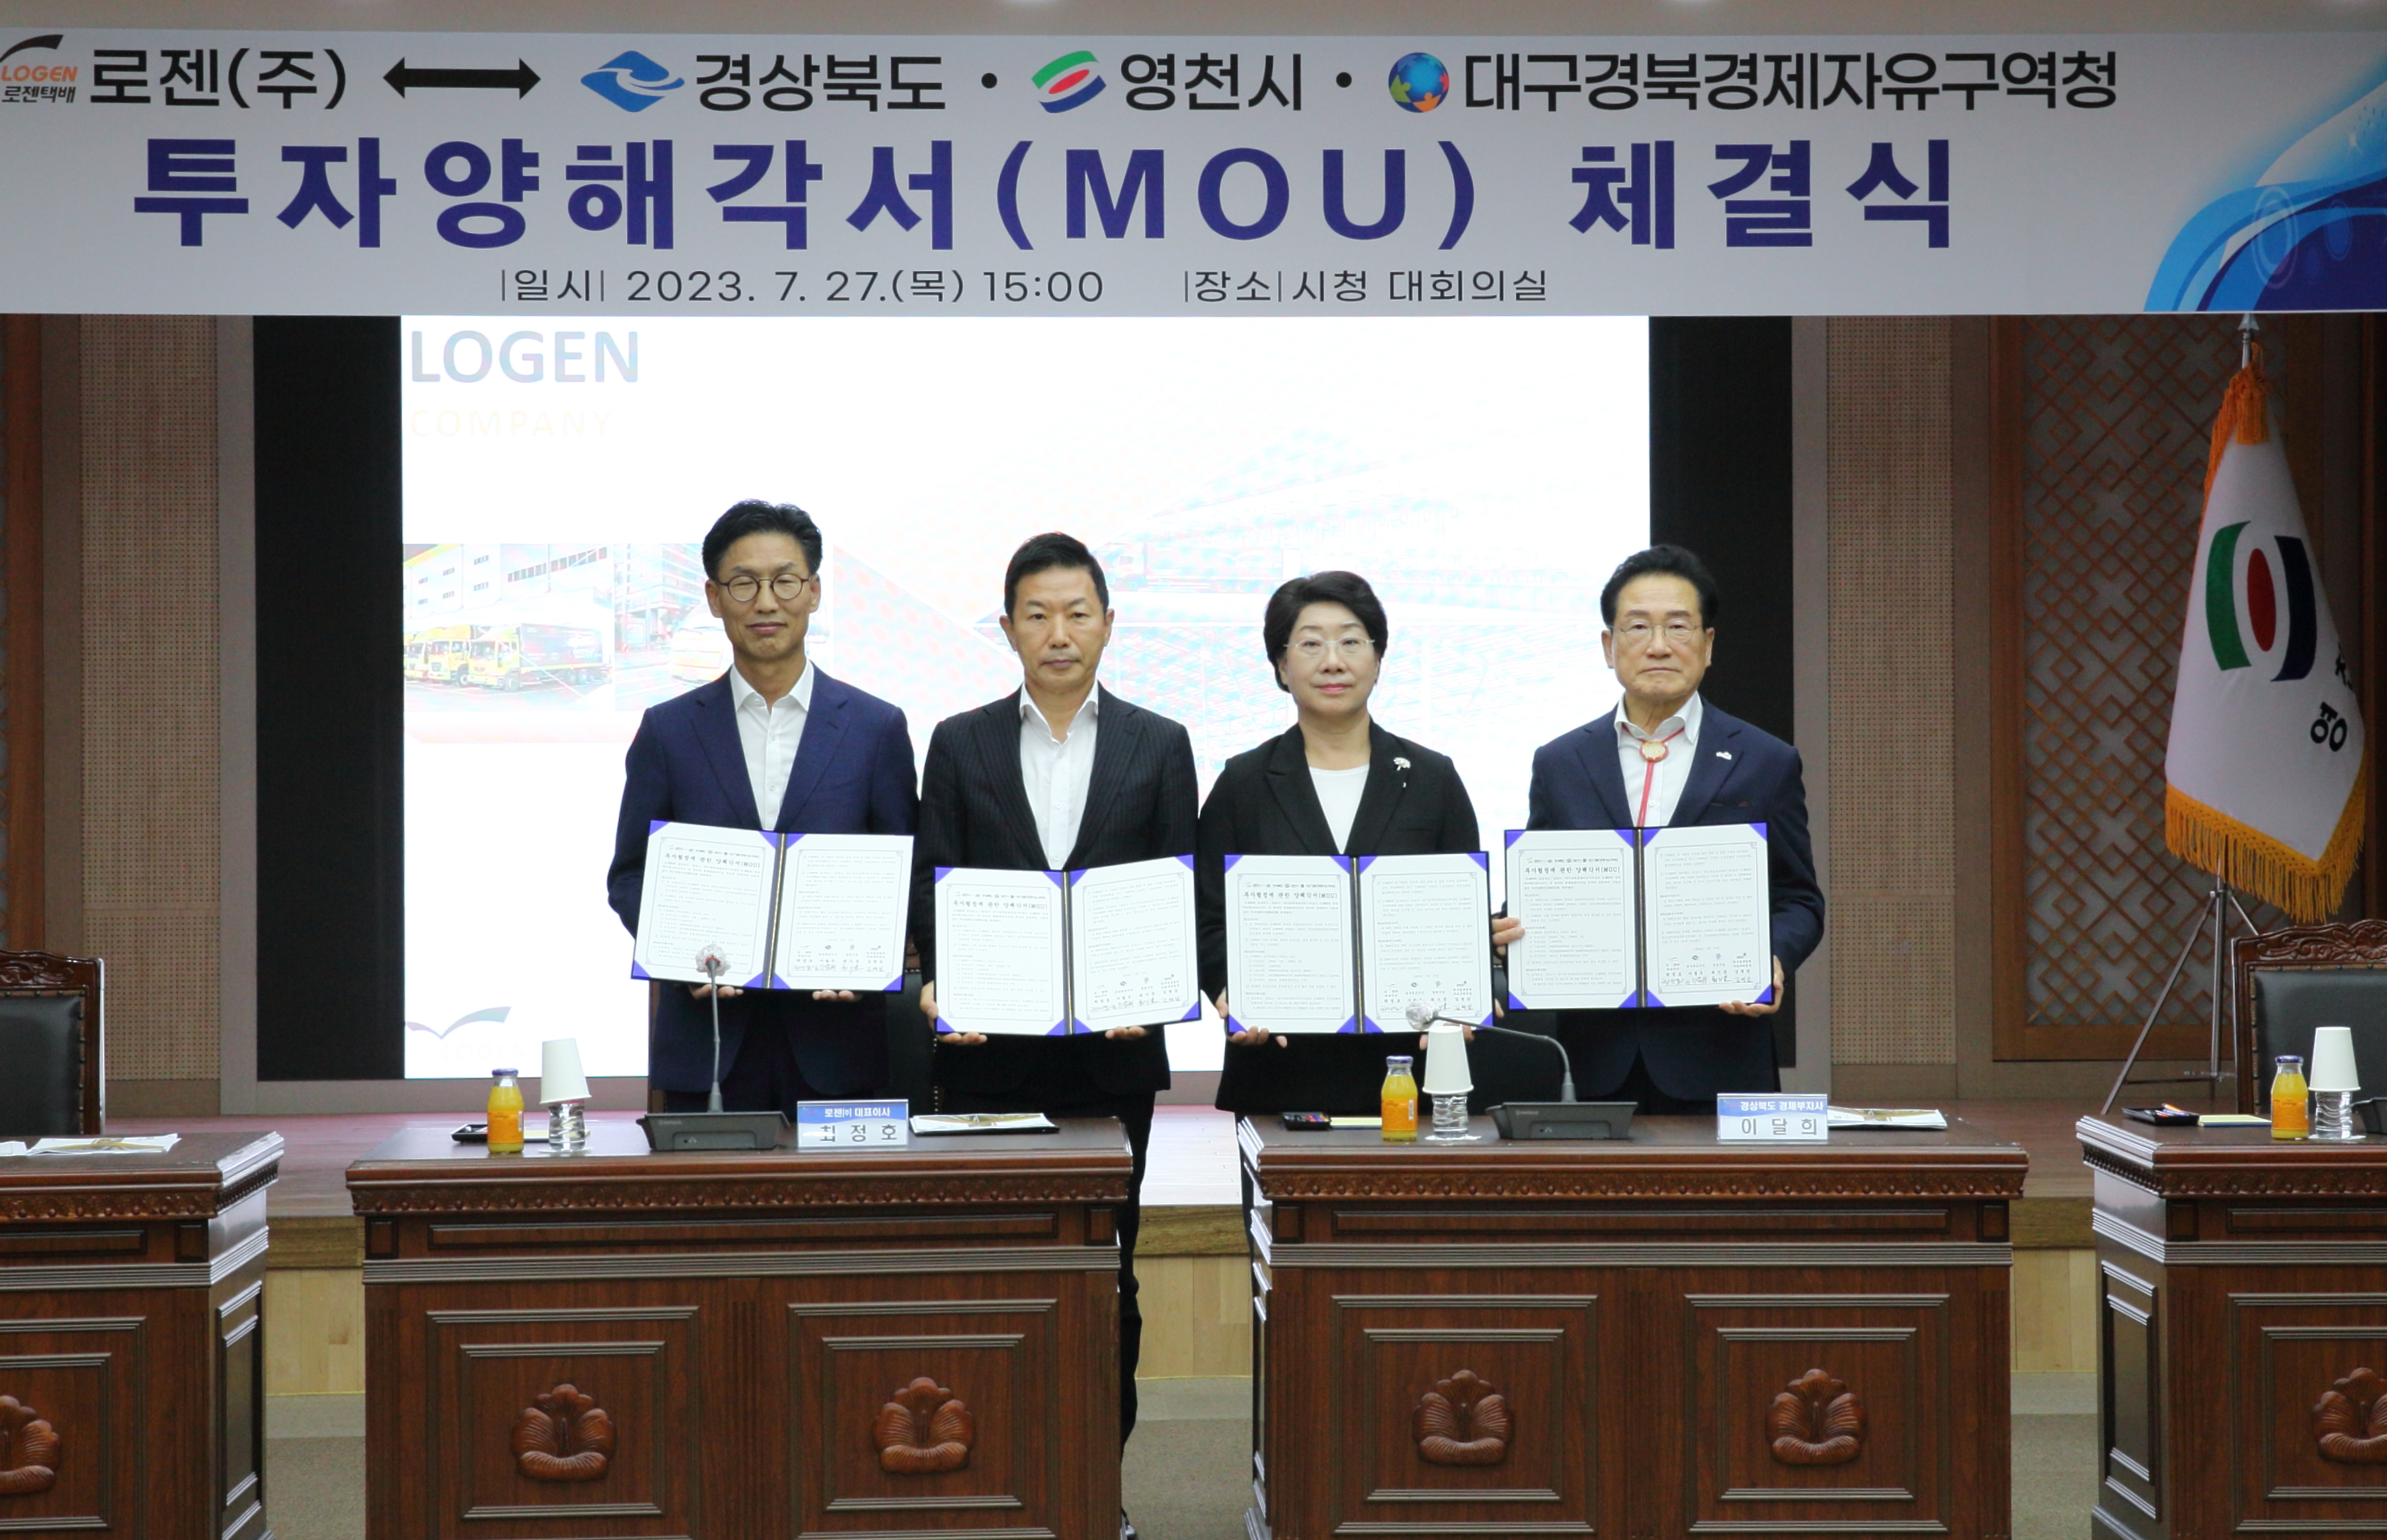 DGFEZ Attracted Logen Co., Ltd. to the Yeongcheon High-tech ...